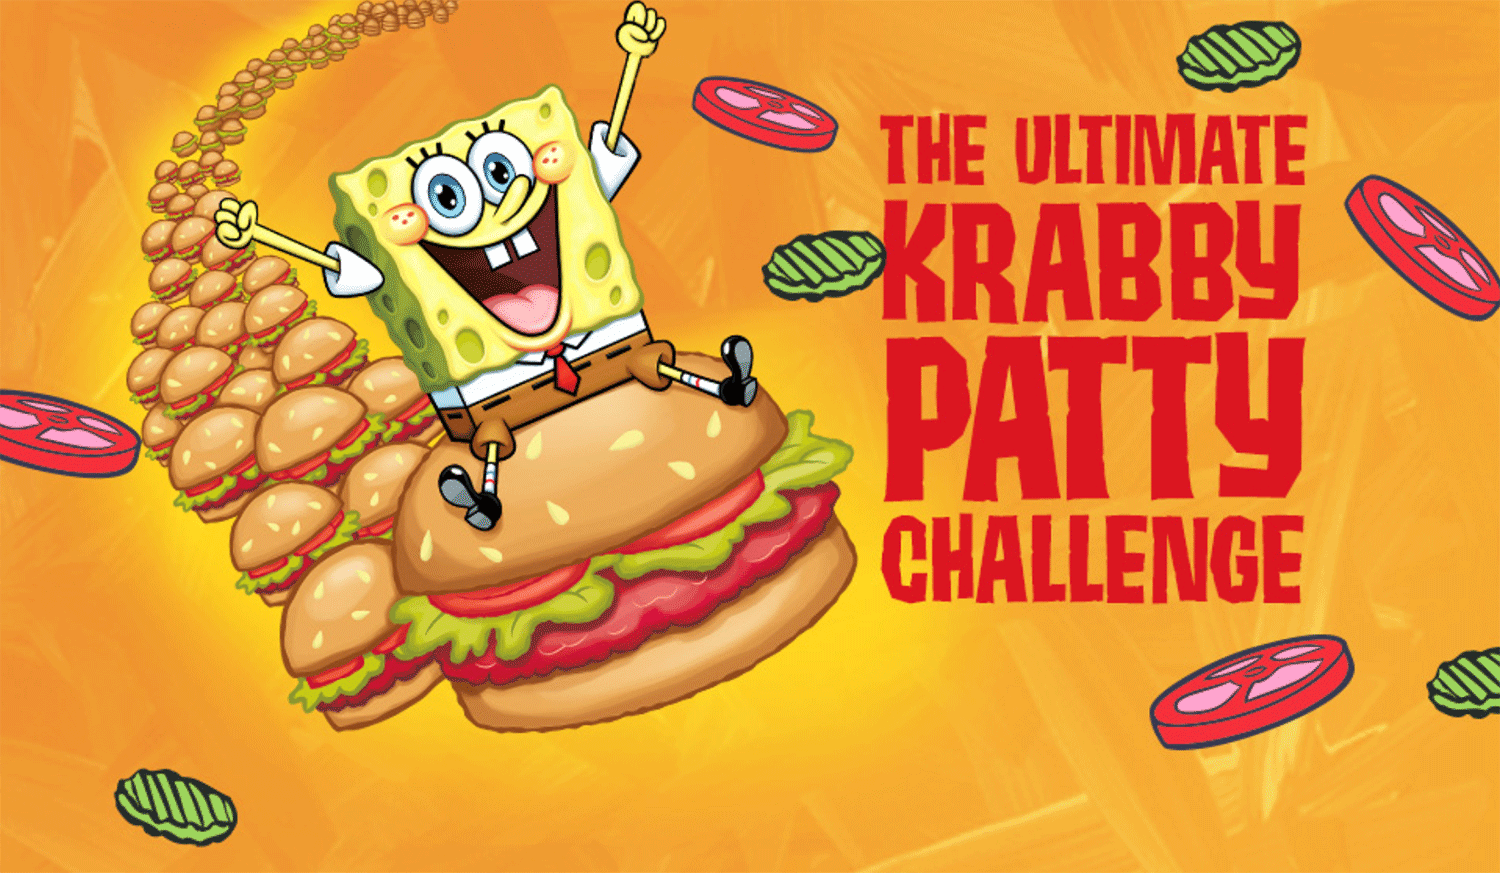 Spongebob Squarepants The Ultimate Krabby Patty Challenge Welcome Screen Screenshot.